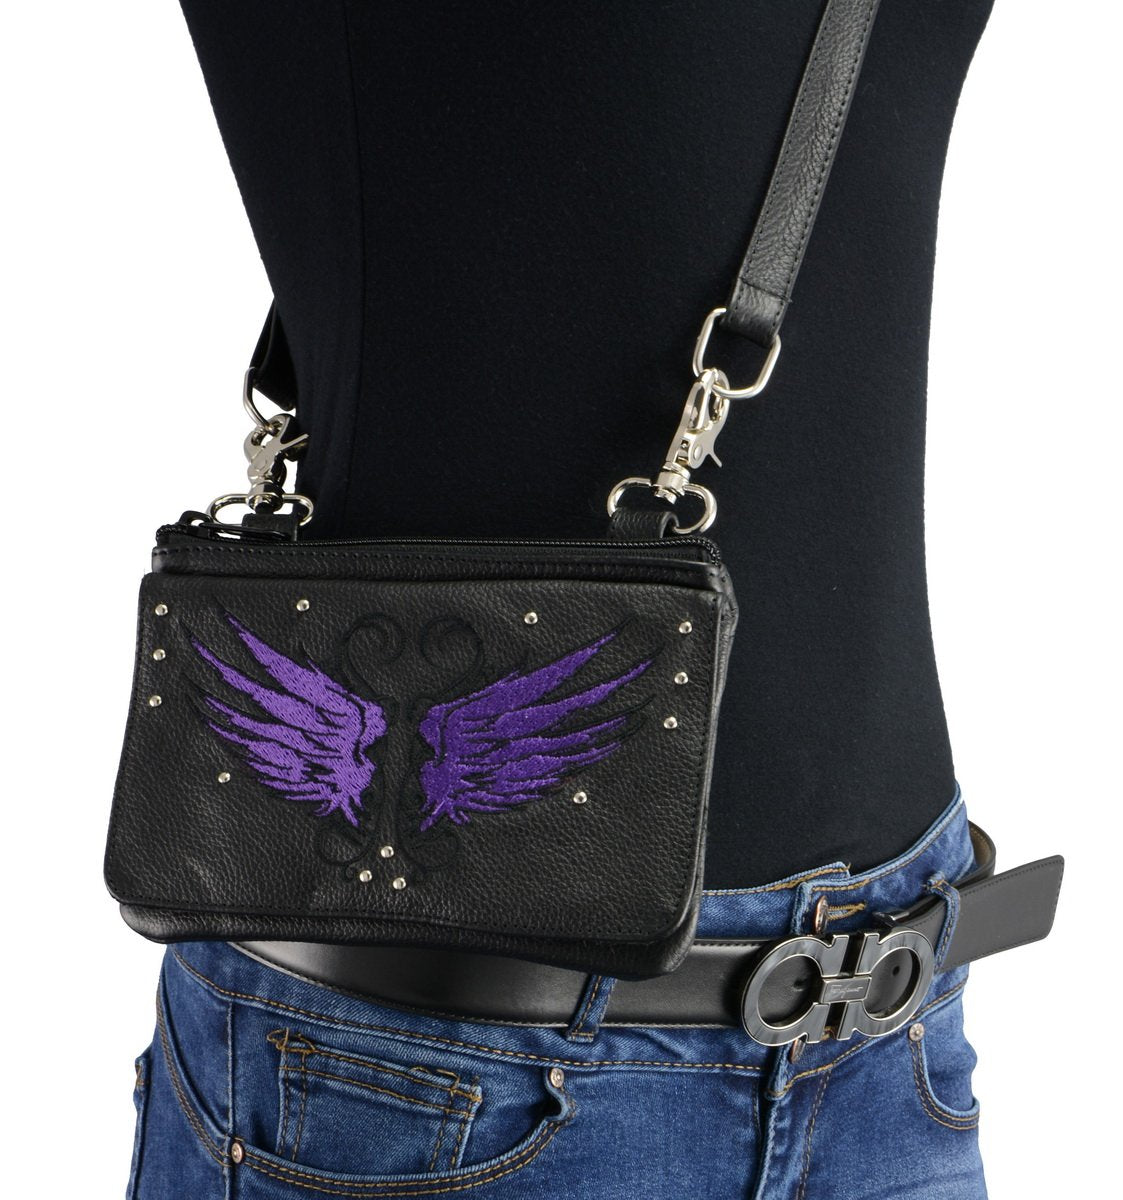 Milwaukee Leather MP8850 Ladies Leather 'Winged' Black and Purple Multi Pocket Belt Bag with Gun Holster